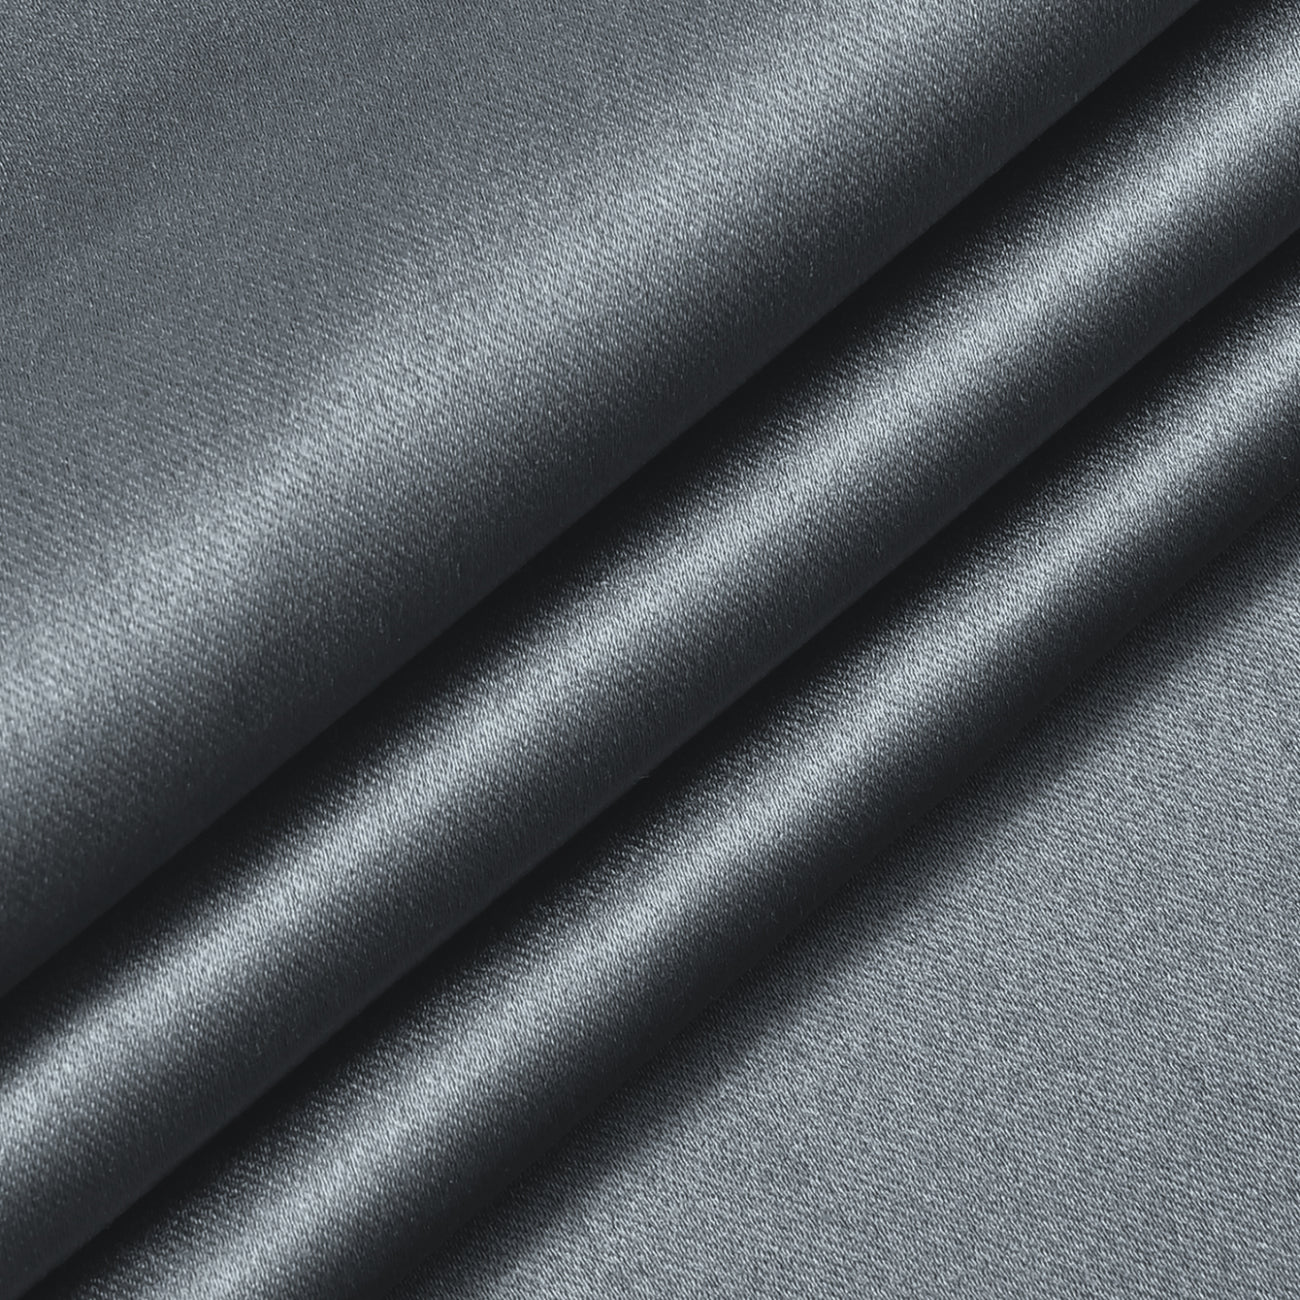 Modern Velvet Solid Color Blackout Thermal Curtains, Dark Gray/Beige